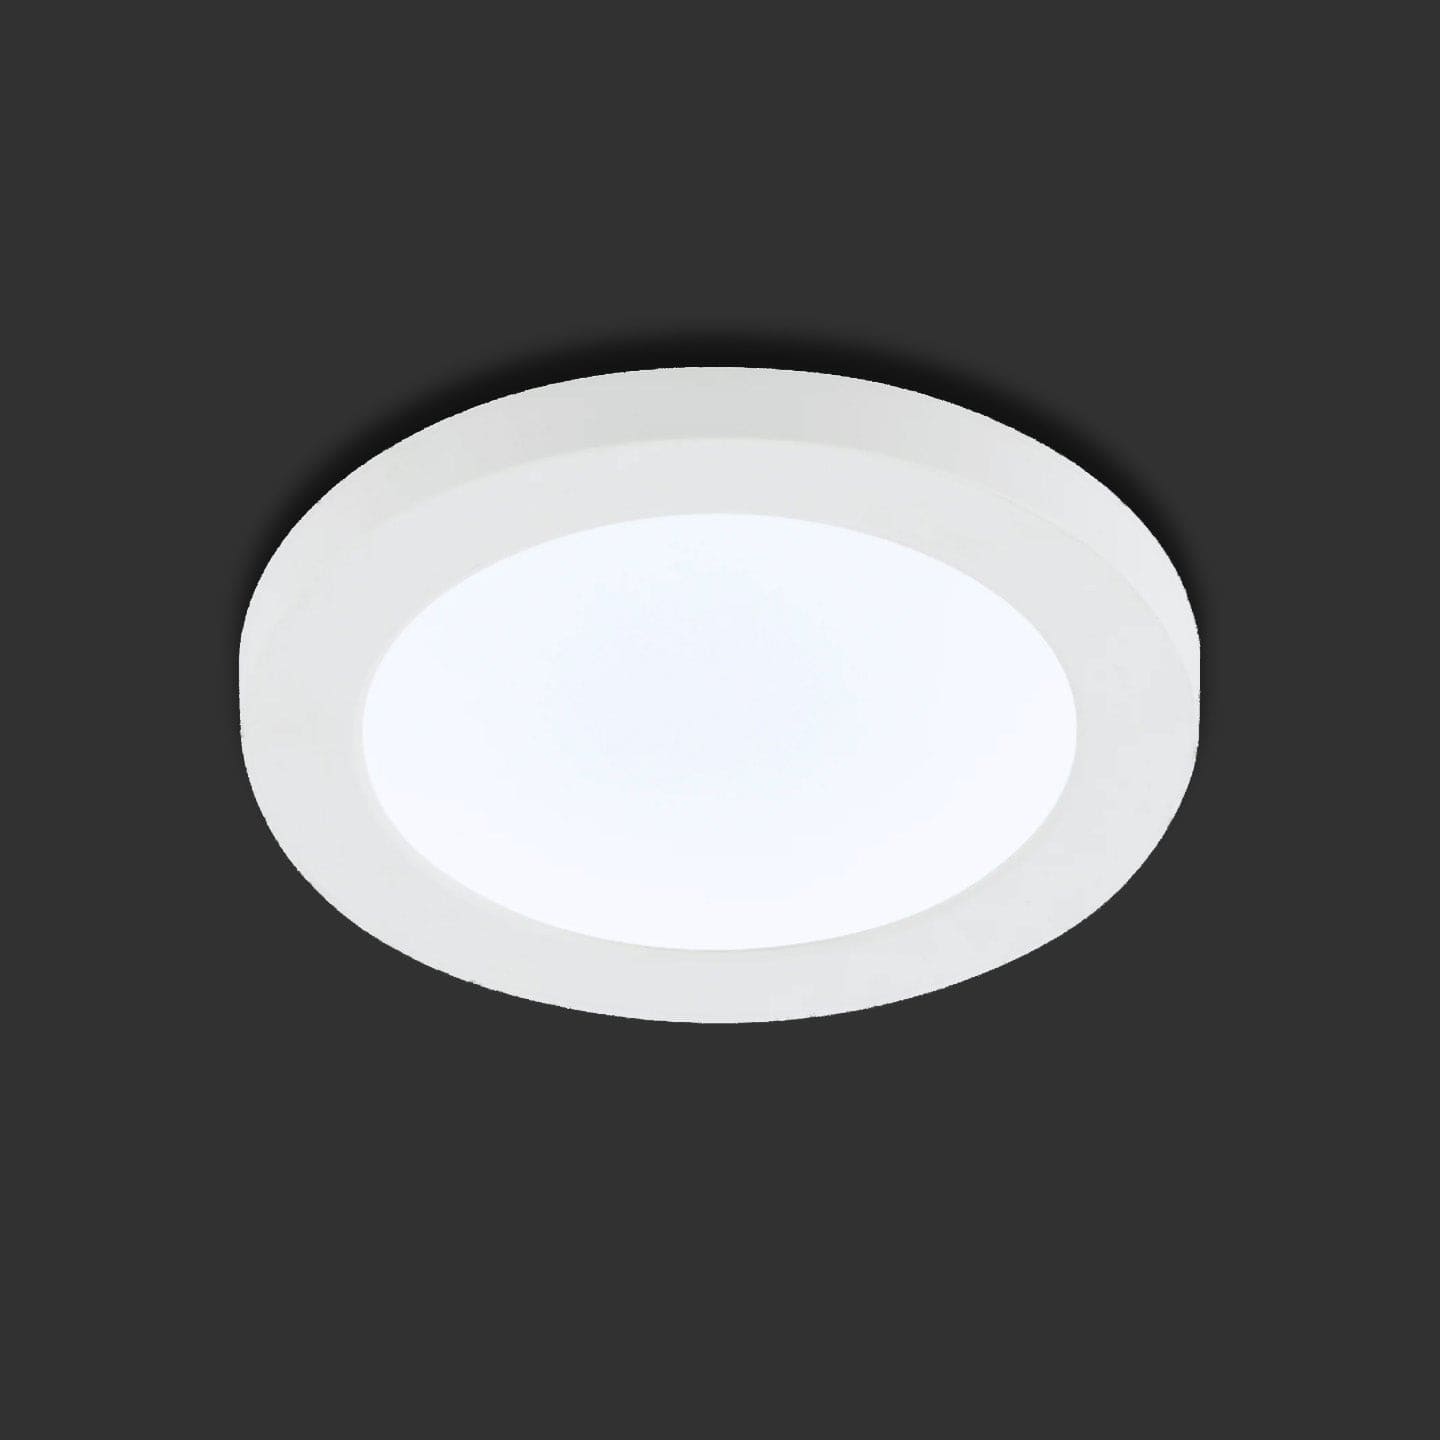 Lights  -  Le Harve White 12w LED Flush Bathroom Light  -  50155599